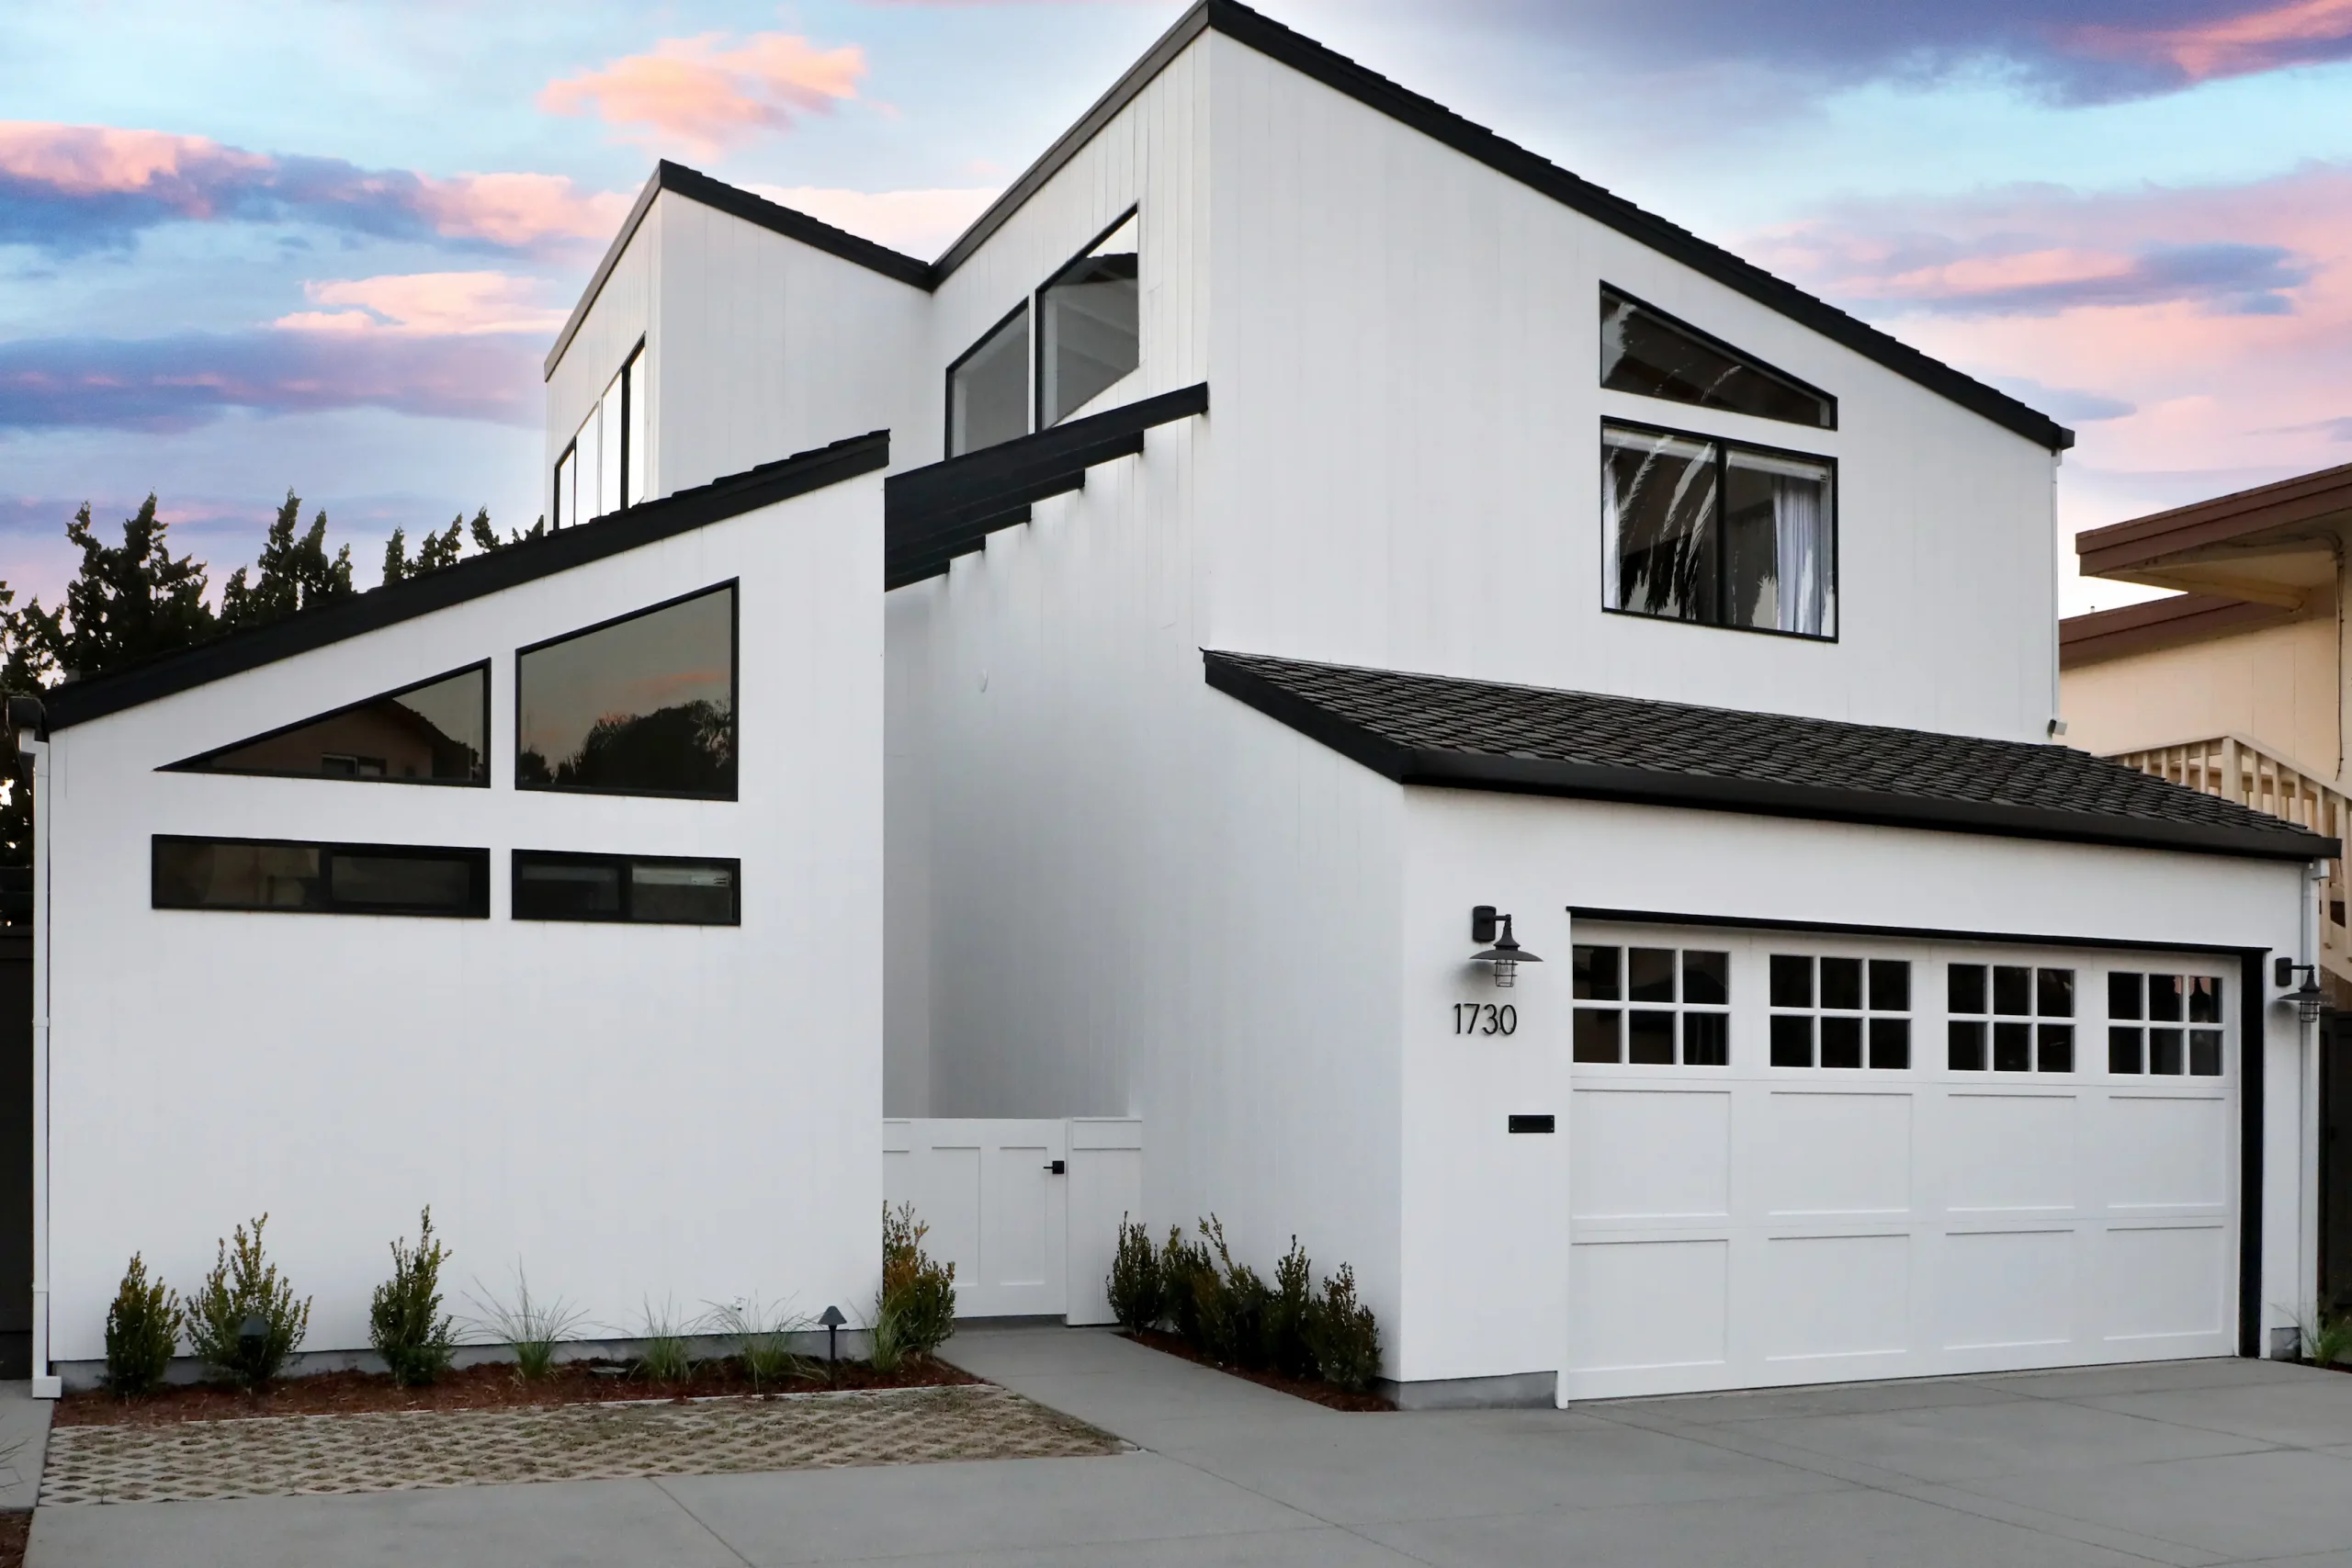 exterior of bungalow white with black trim